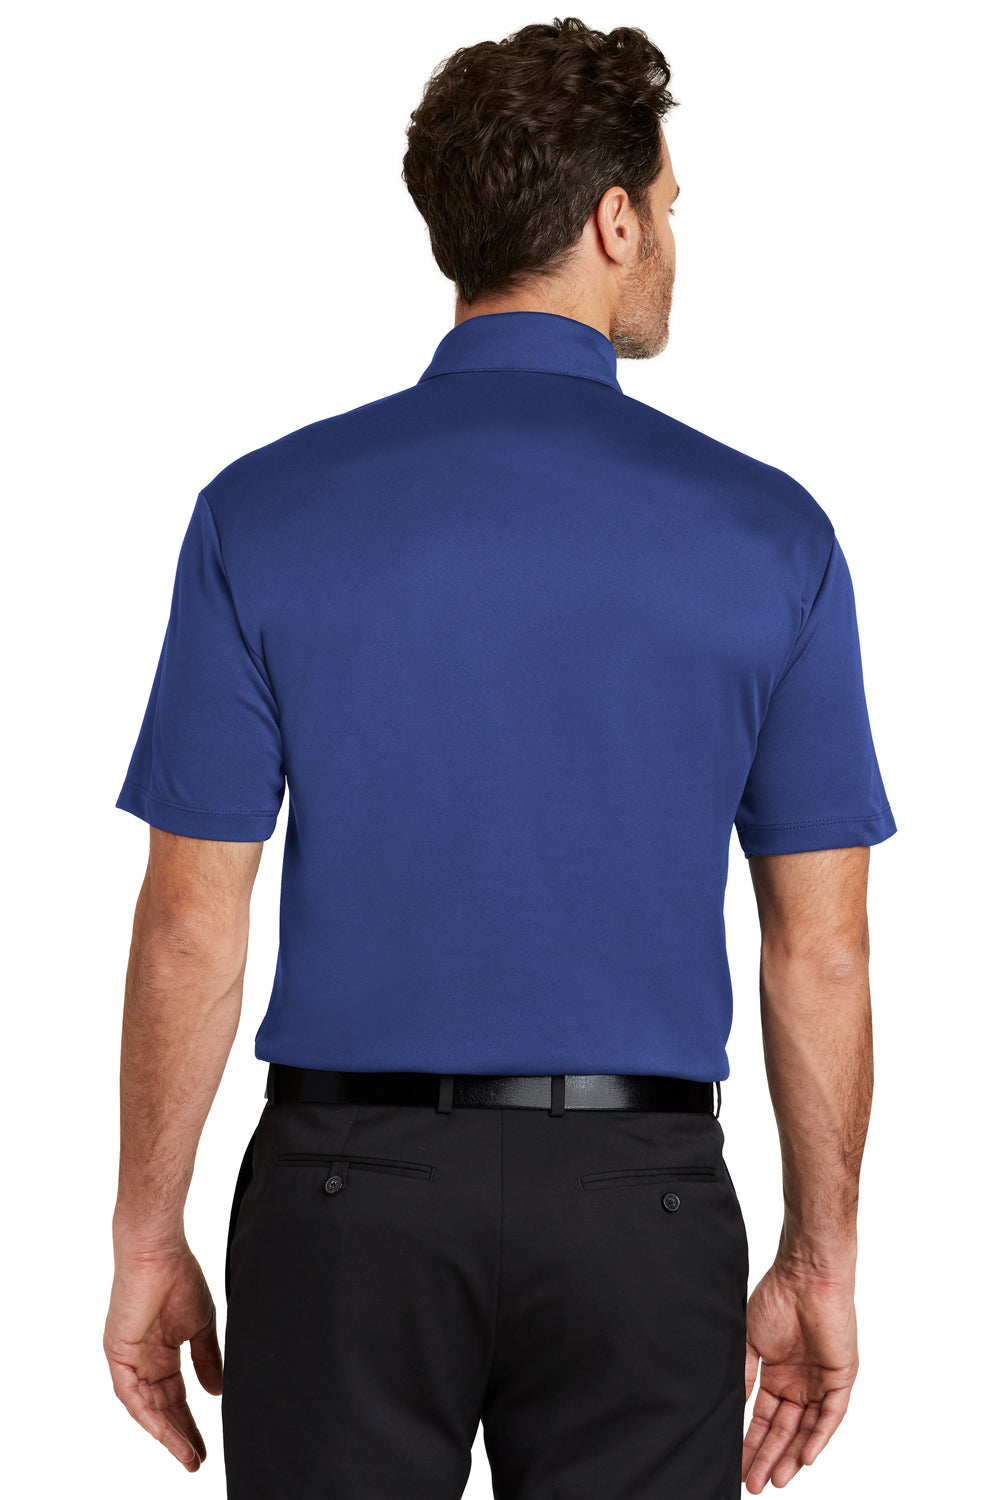 Port Authority K540 Mens Silk Touch Performance Moisture Wicking Short Sleeve Polo Shirt Royal Blue Back